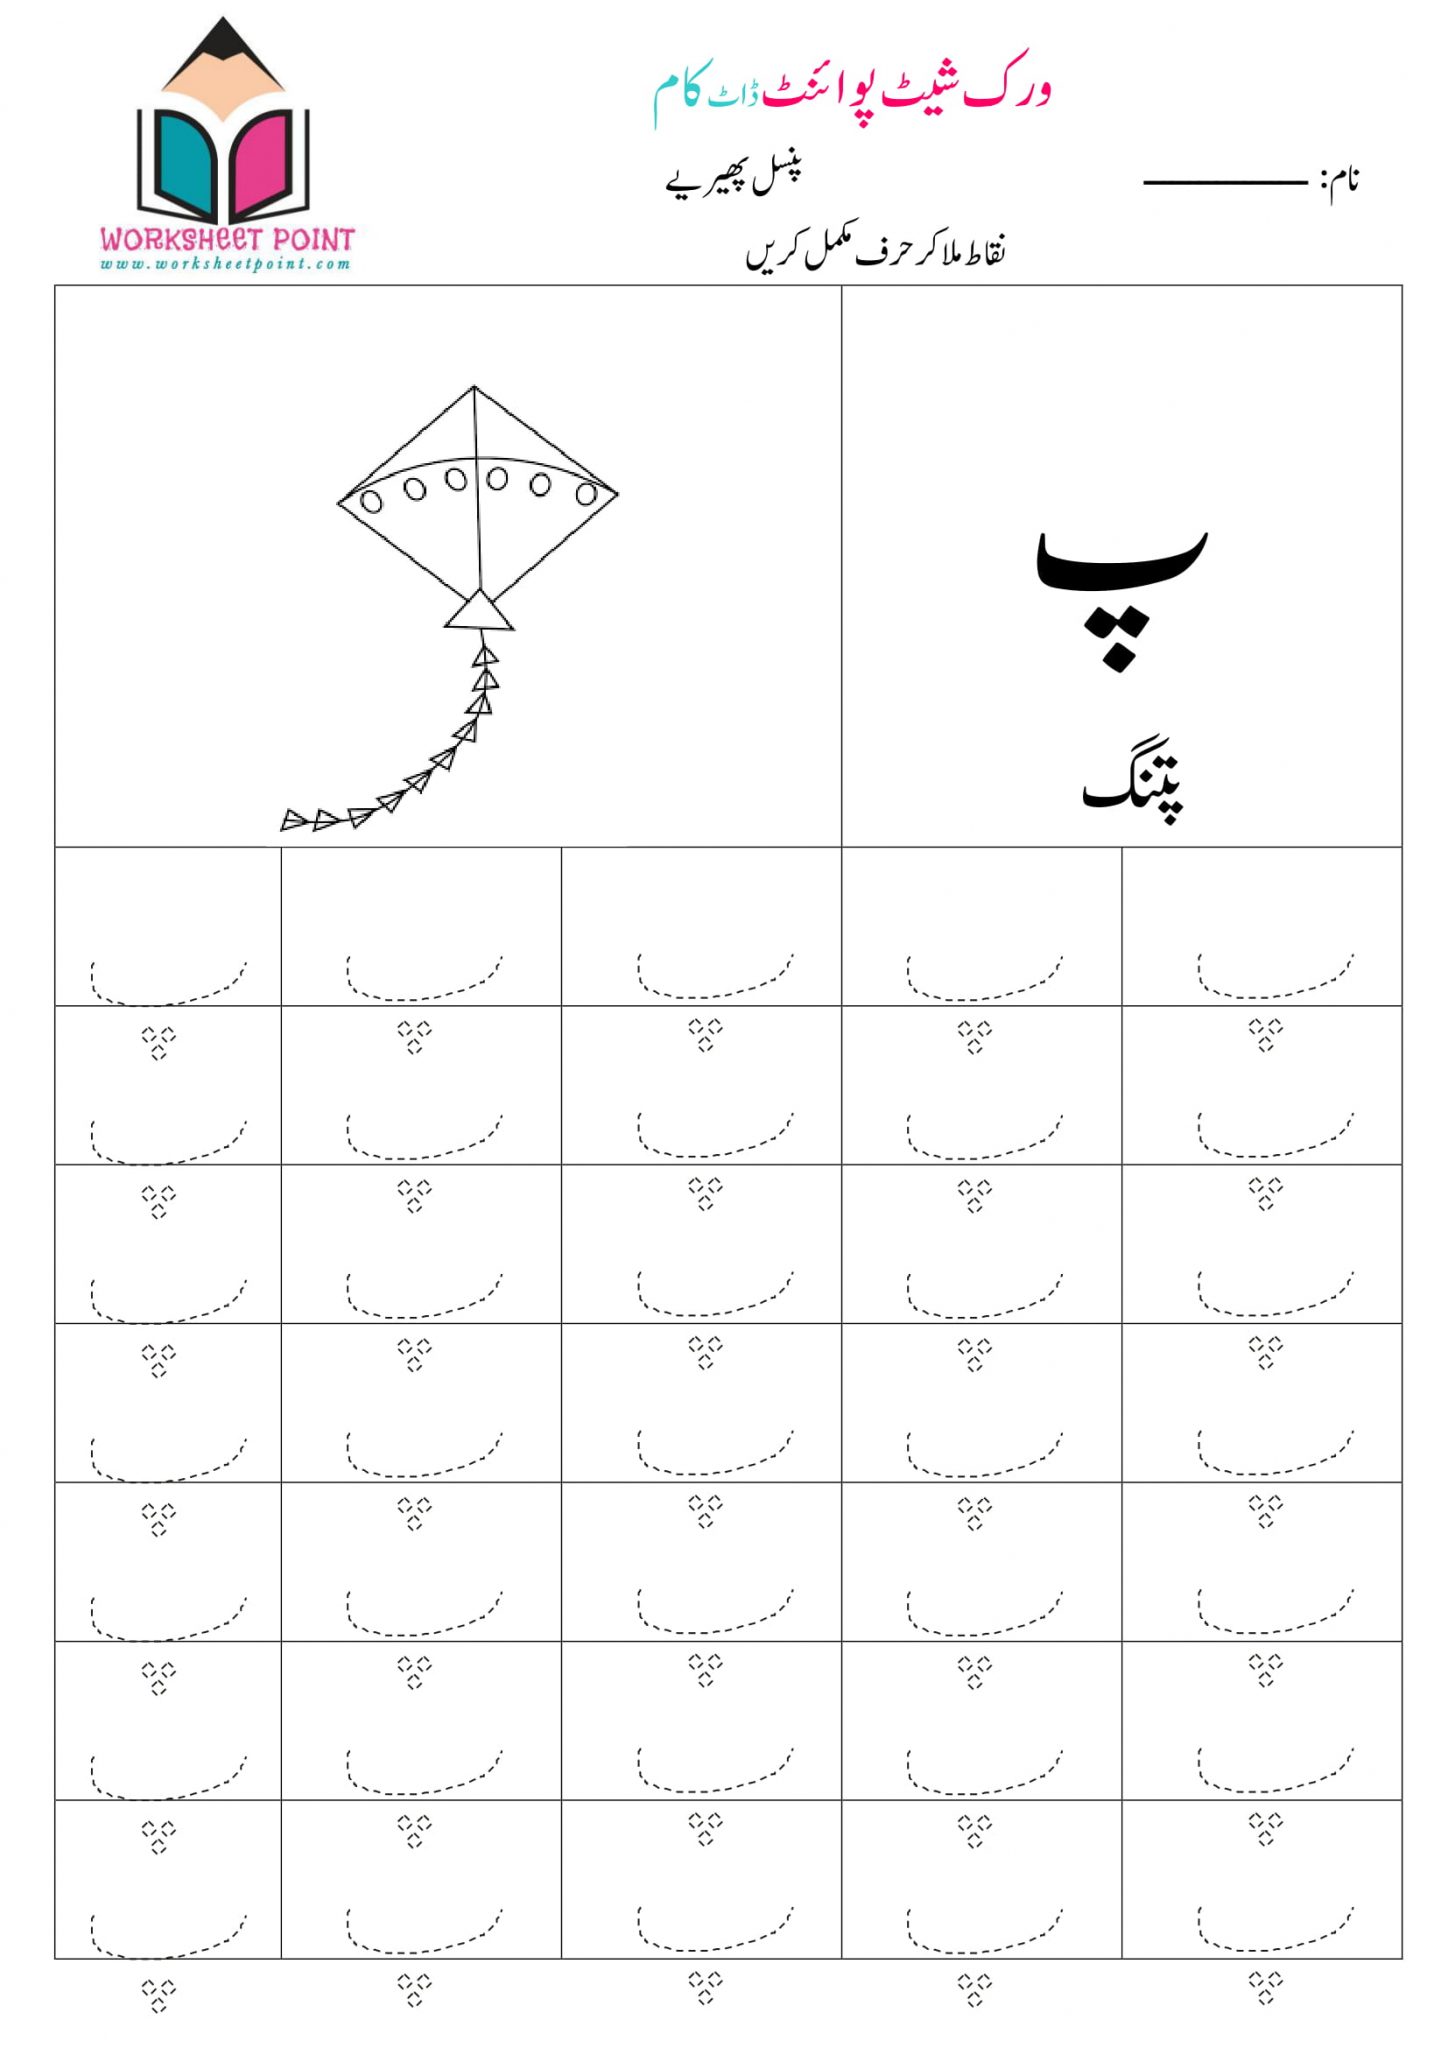 urdu-alphabets-tracing-worksheets-pdf-urdu-practice-dry-erase-board-urdu-poems-for-kids-webb